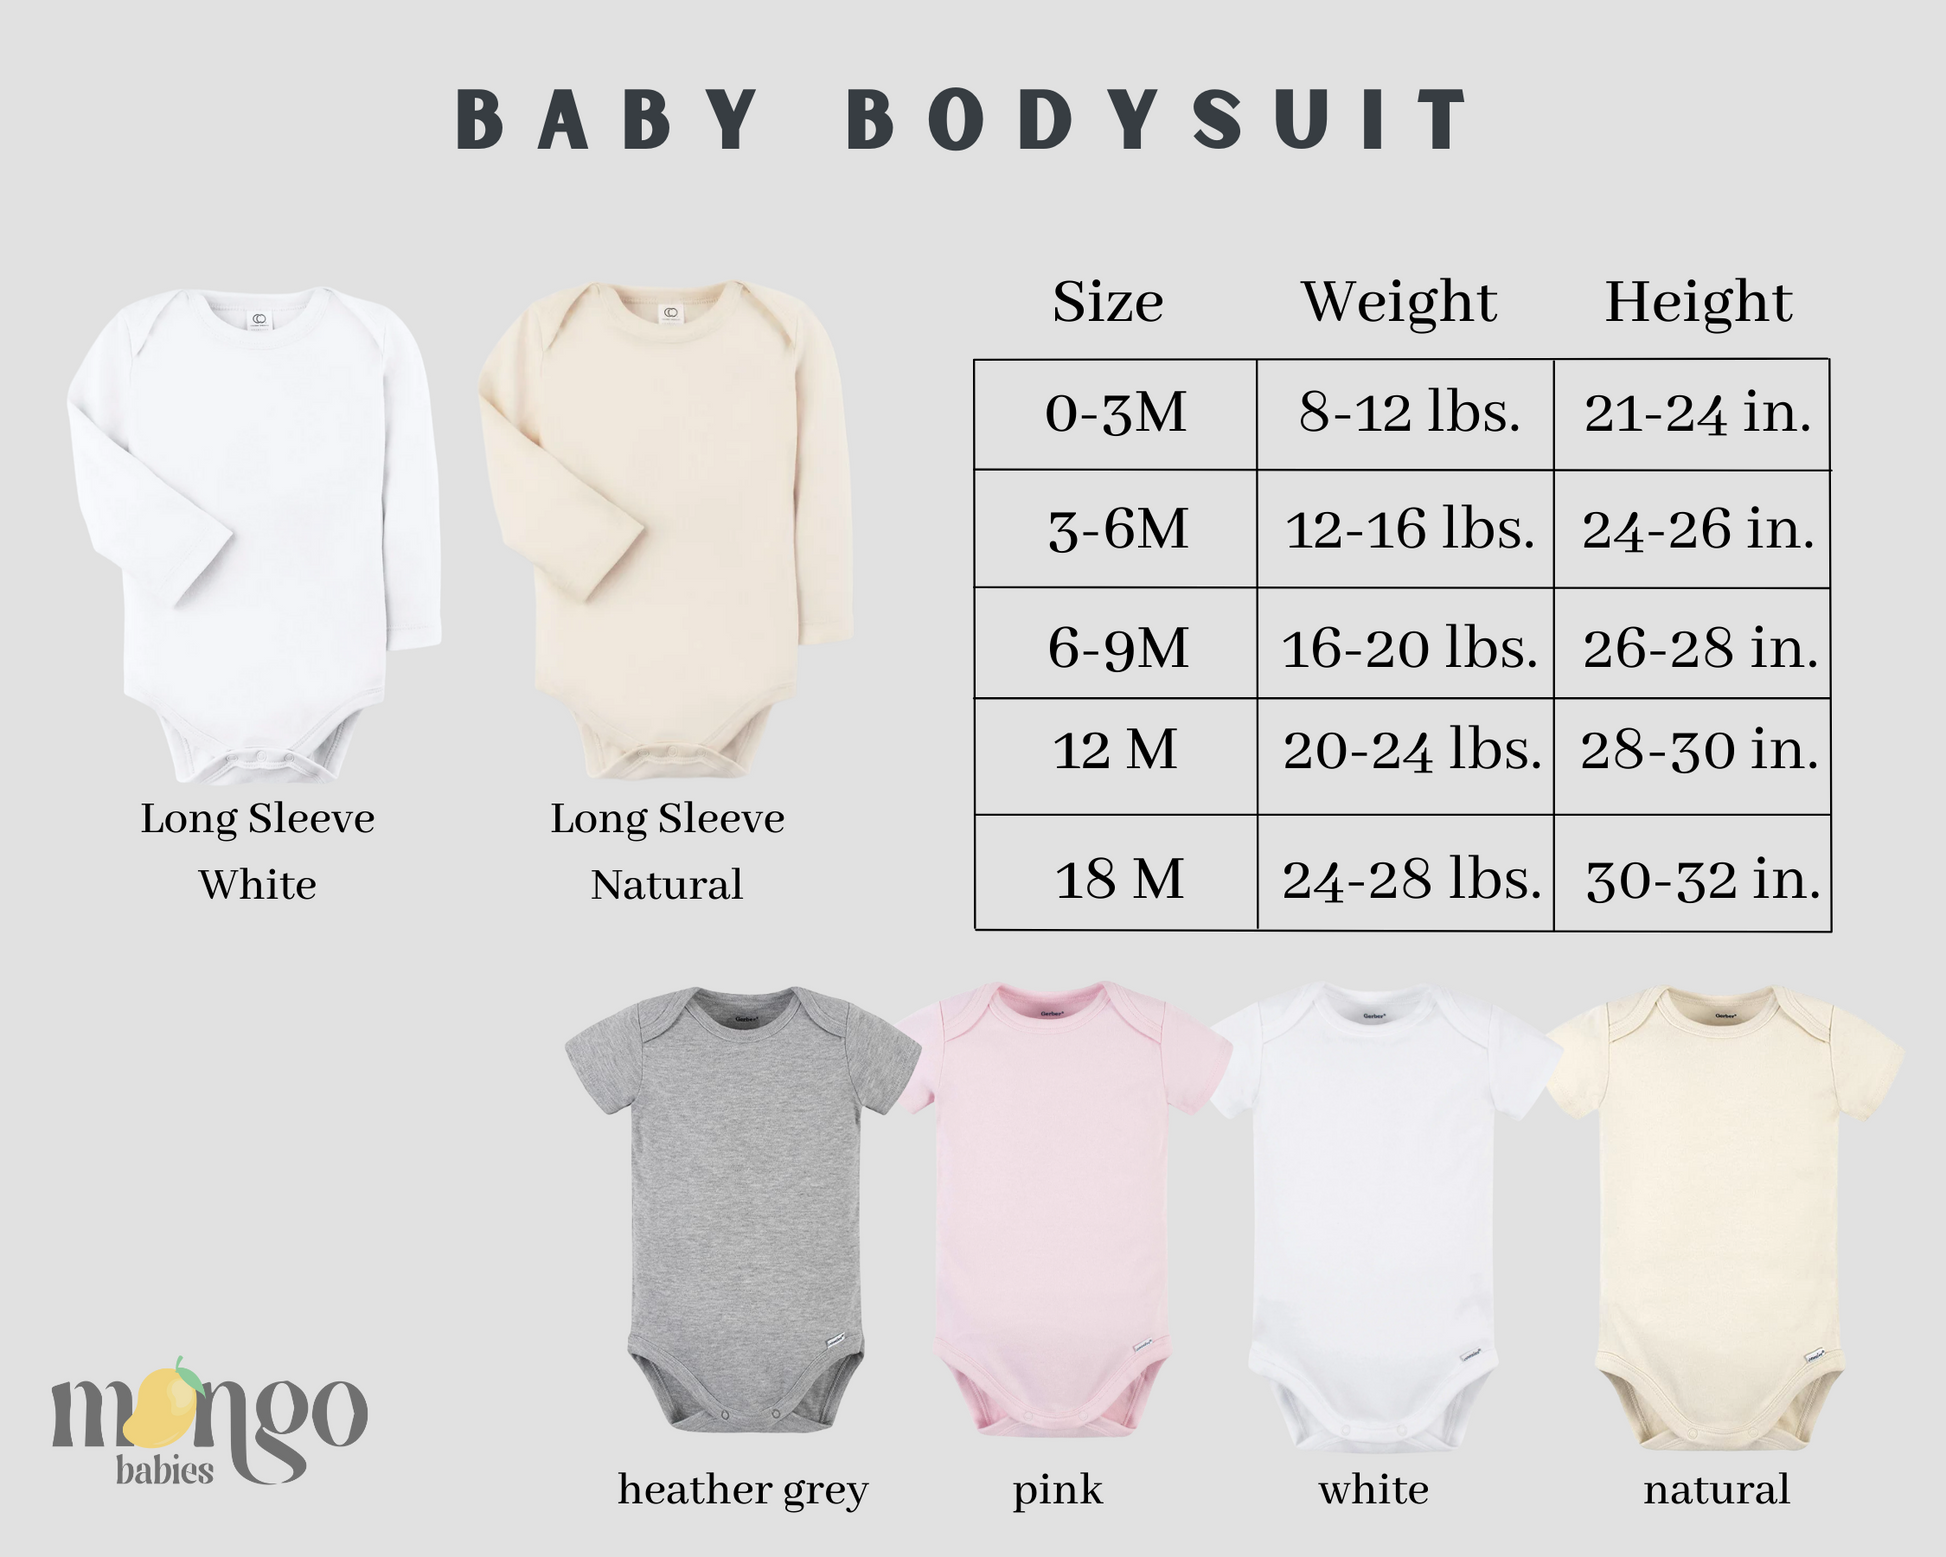  Baby Bodysuits